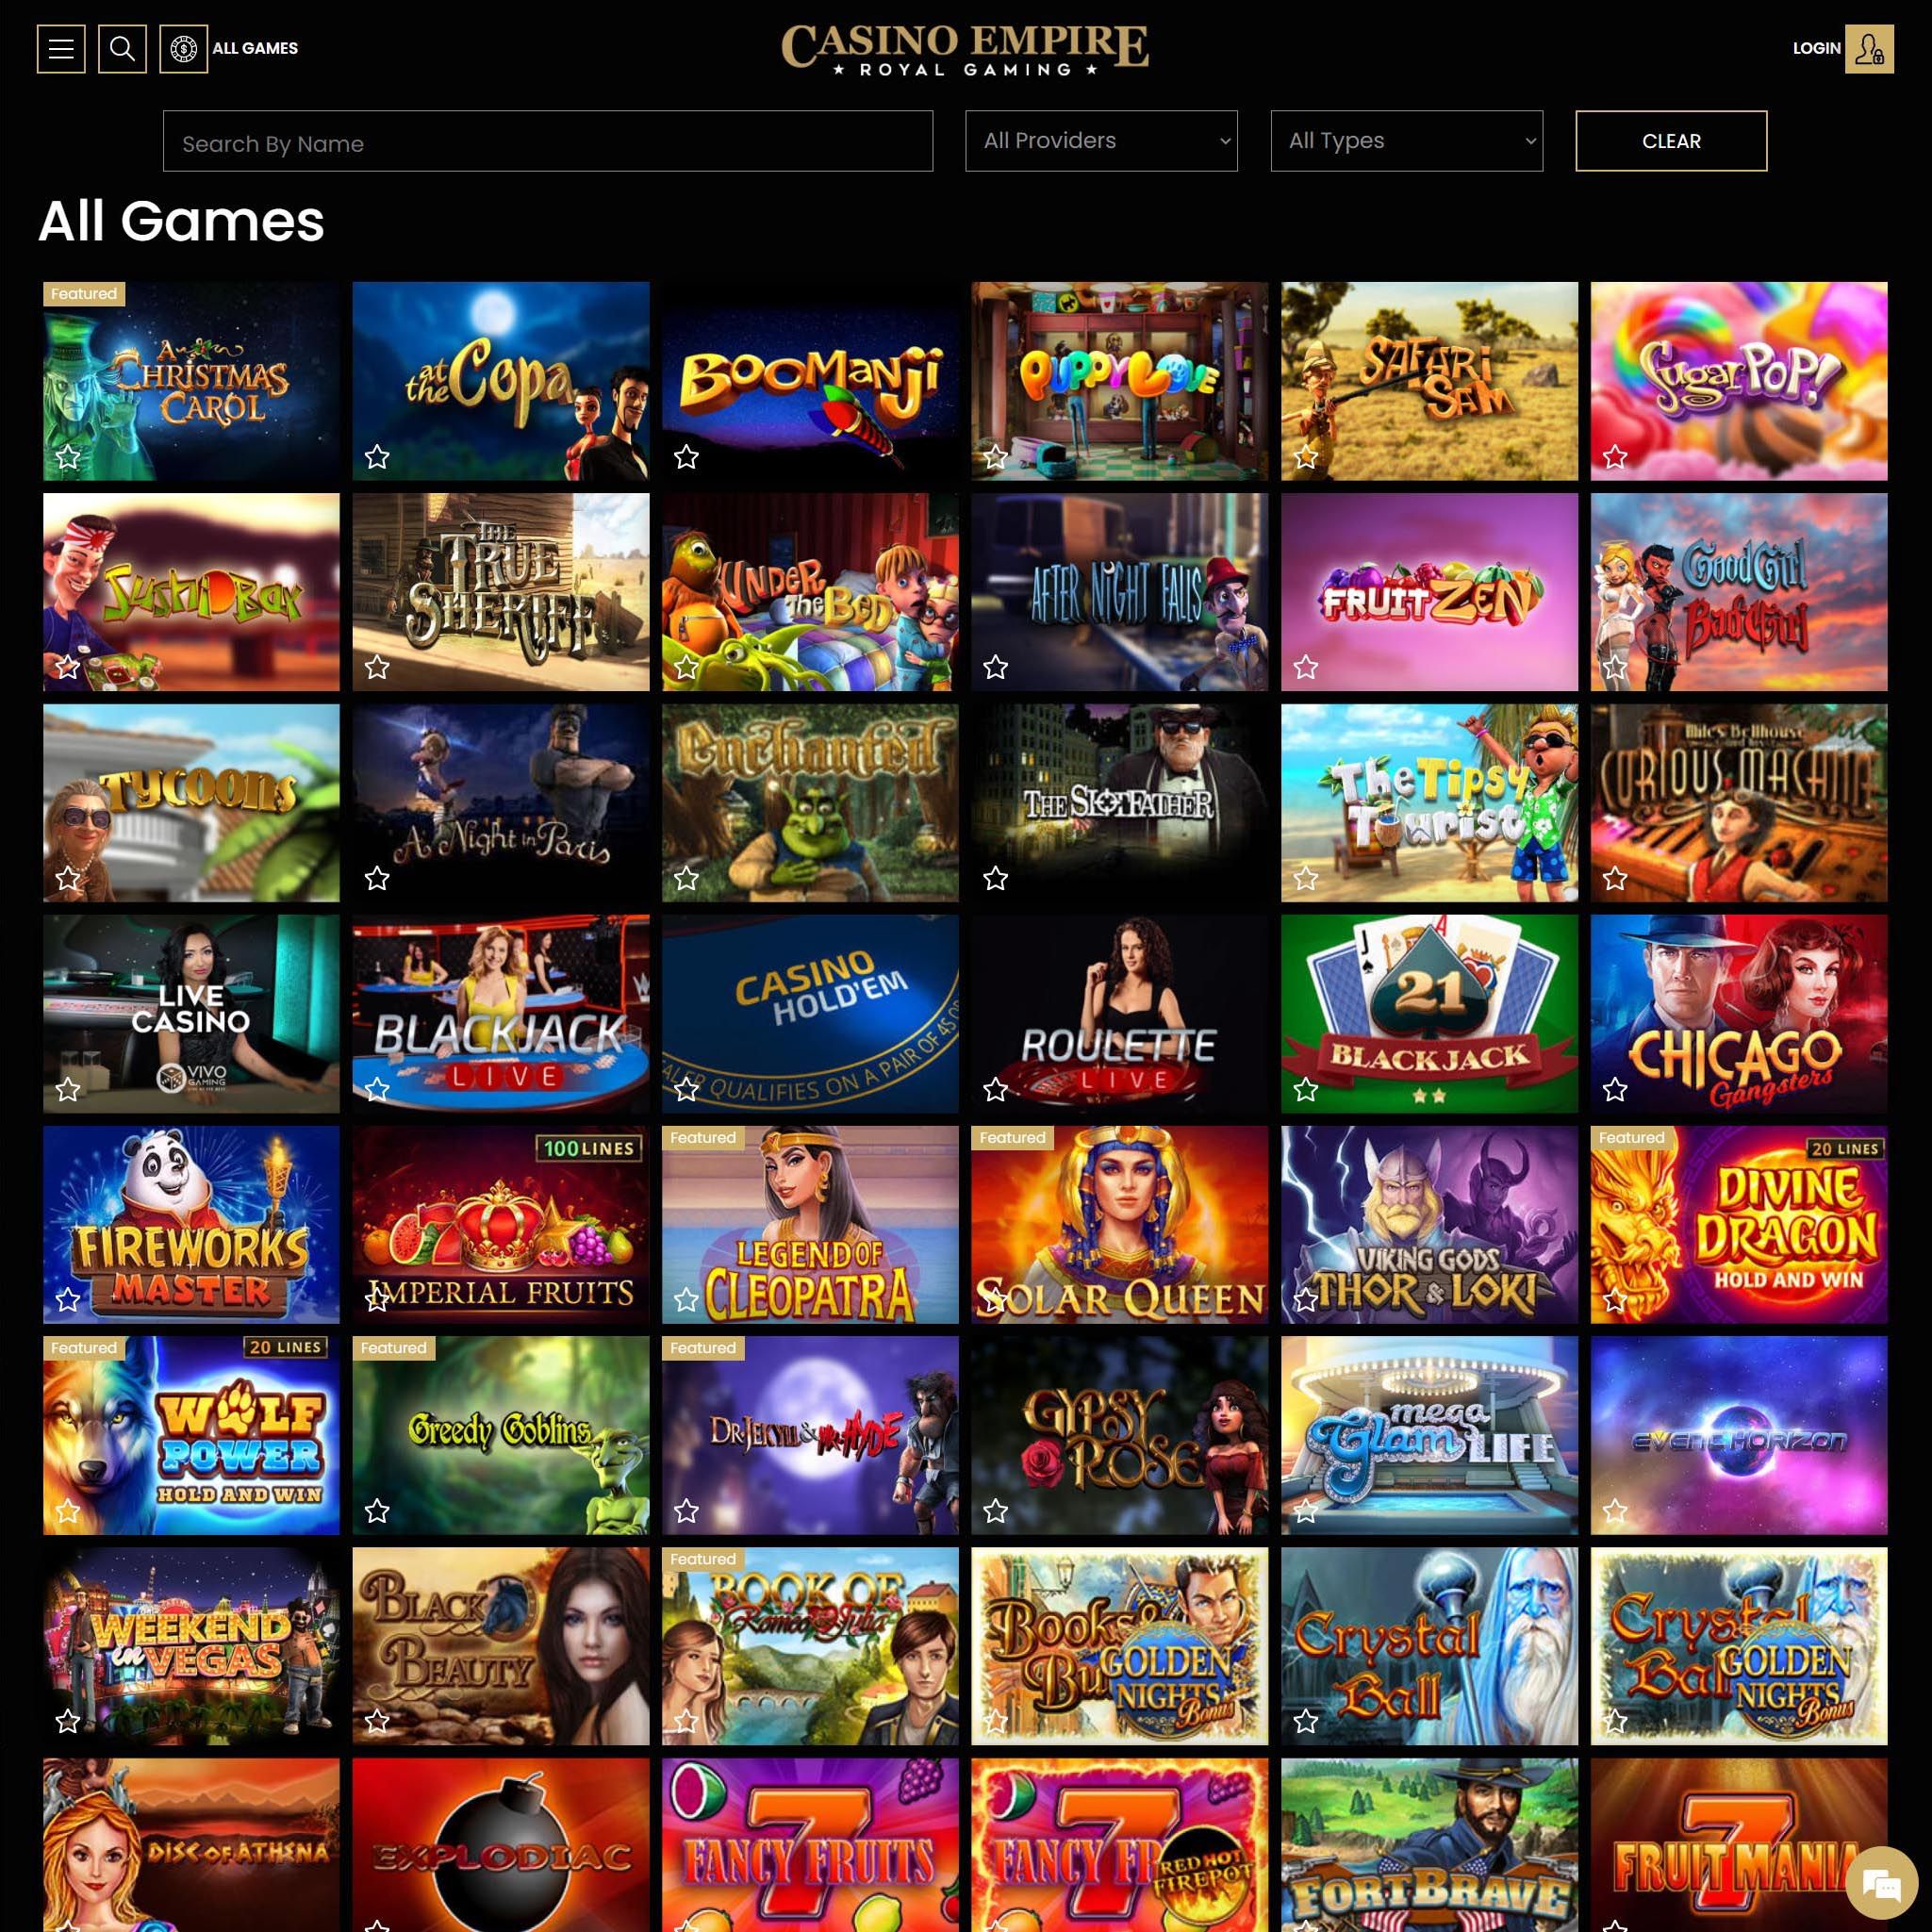 Casino Empire full games catalogue